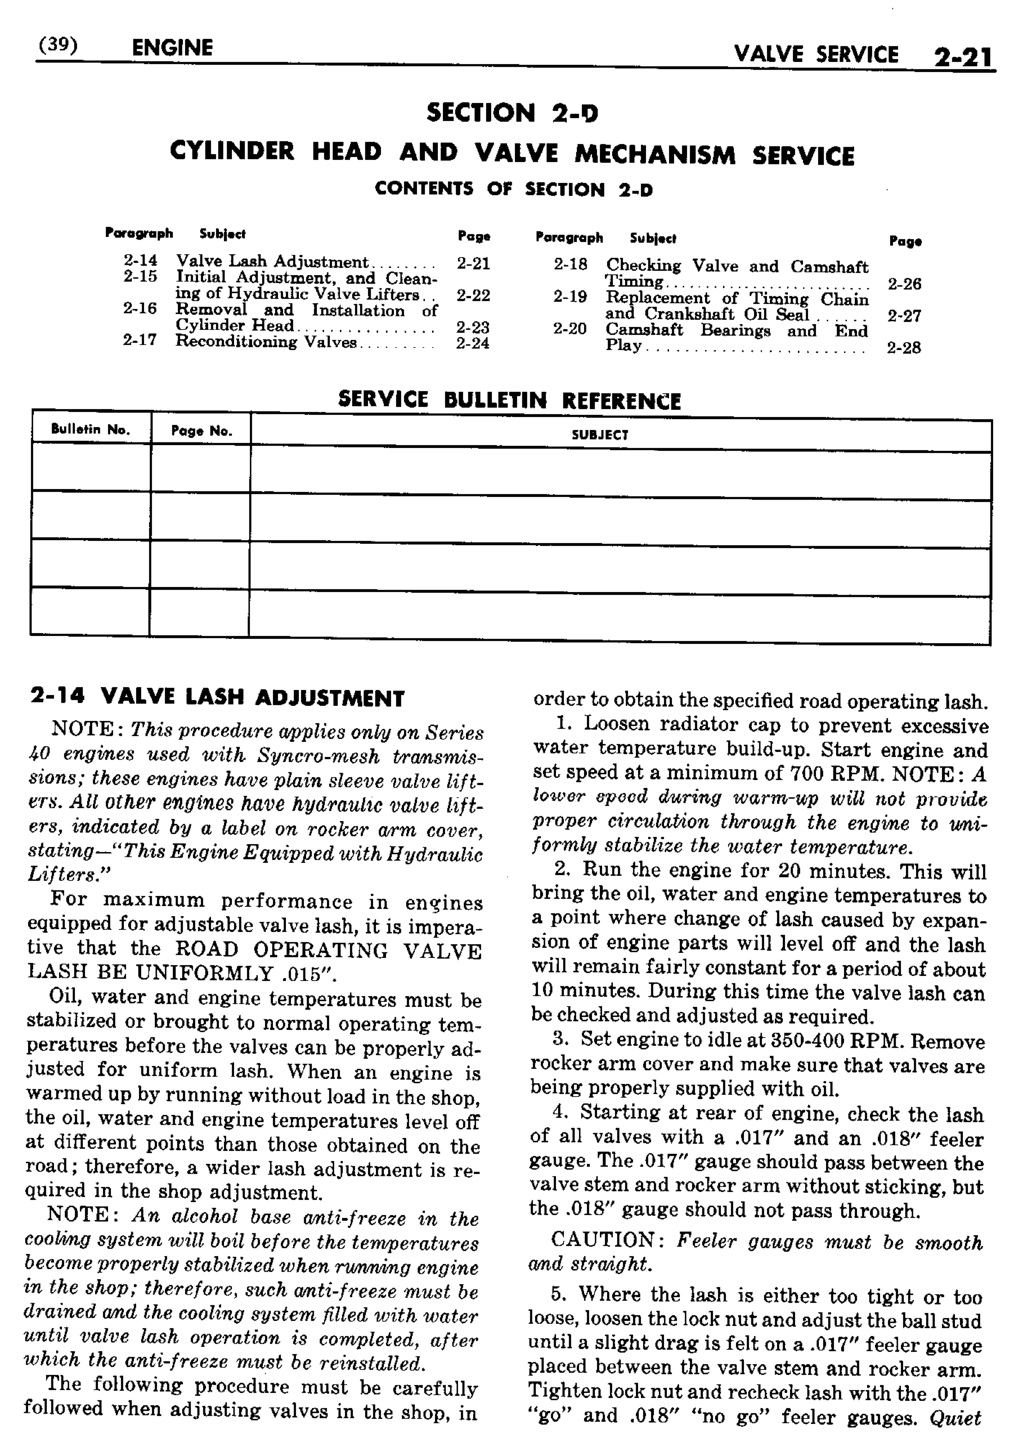 n_03 1950 Buick Shop Manual - Engine-021-021.jpg